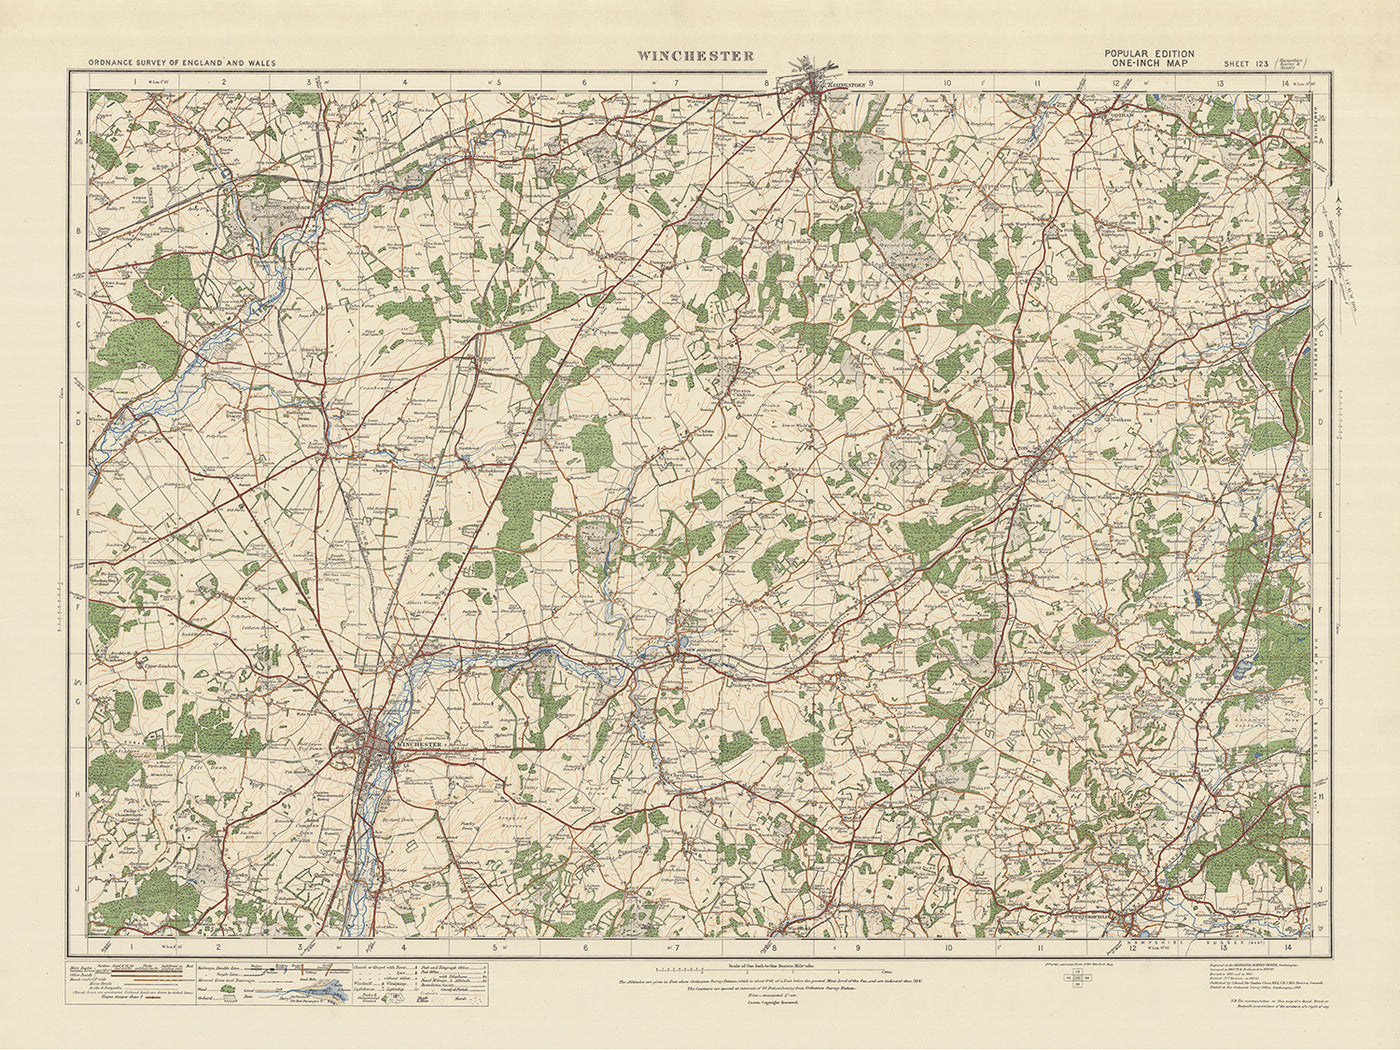 Carte Old Ordnance Survey, feuille 123 - Winchester, 1925 : Basingstoke, Whitchurch, Petersfield, Alton, Odiham